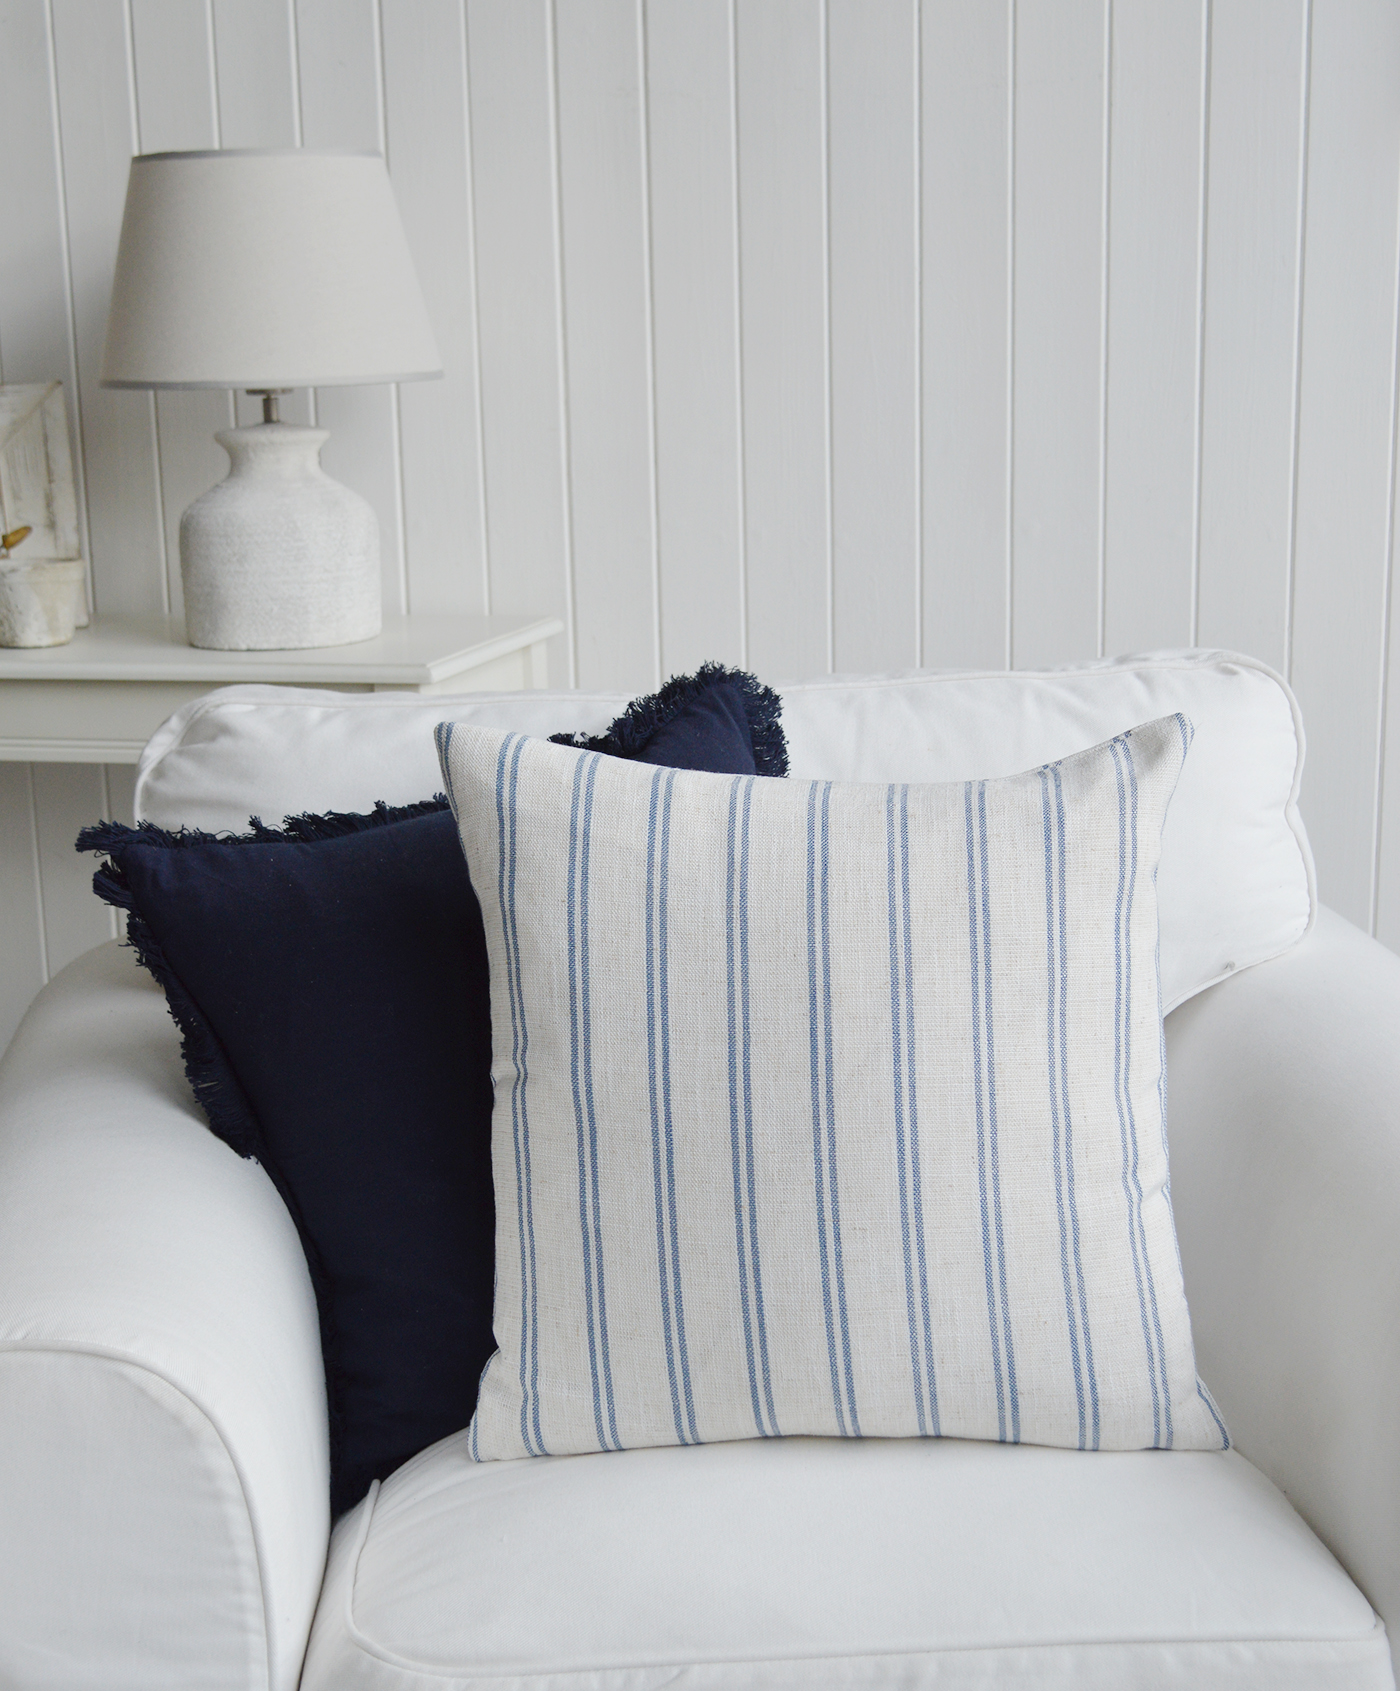 Harrison Blue and White Stripe Cushion Cover. Range of New ENgland coastal cushions